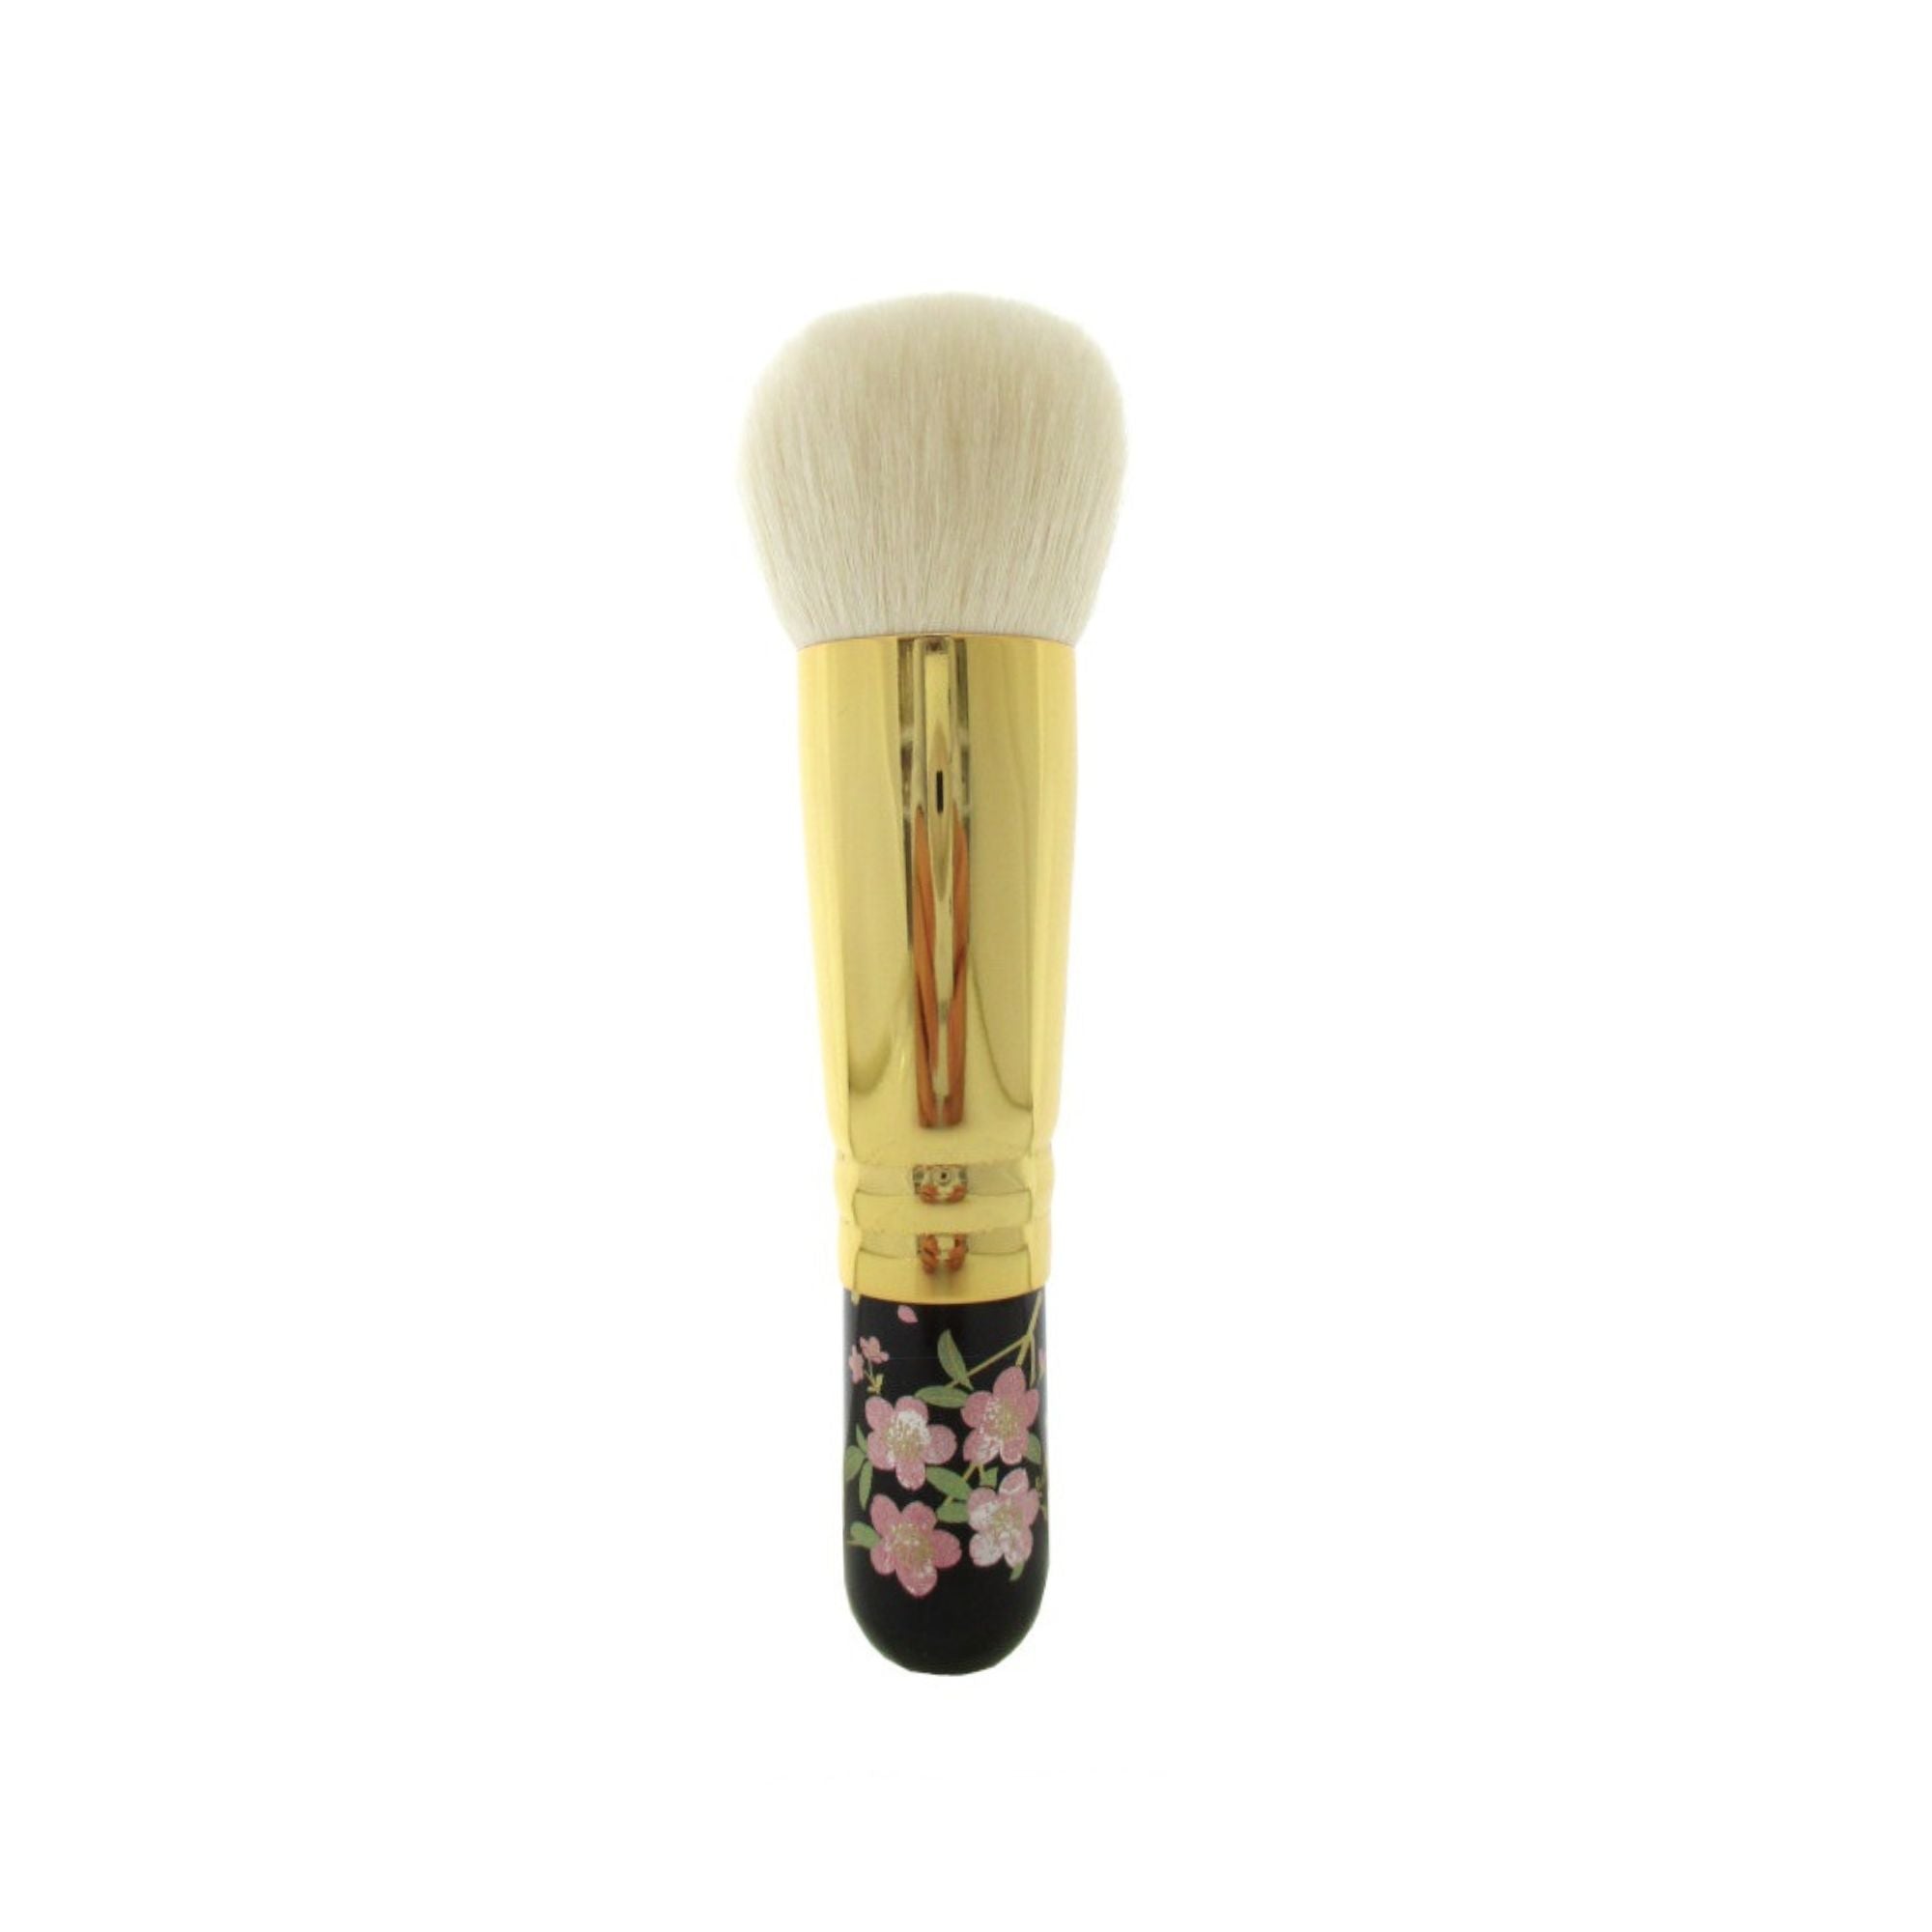 Eihodo WP PC-1 Puff Brush, Sakura Makie Designs (White bristles) - Fude Beauty, Japanese Makeup Brushes